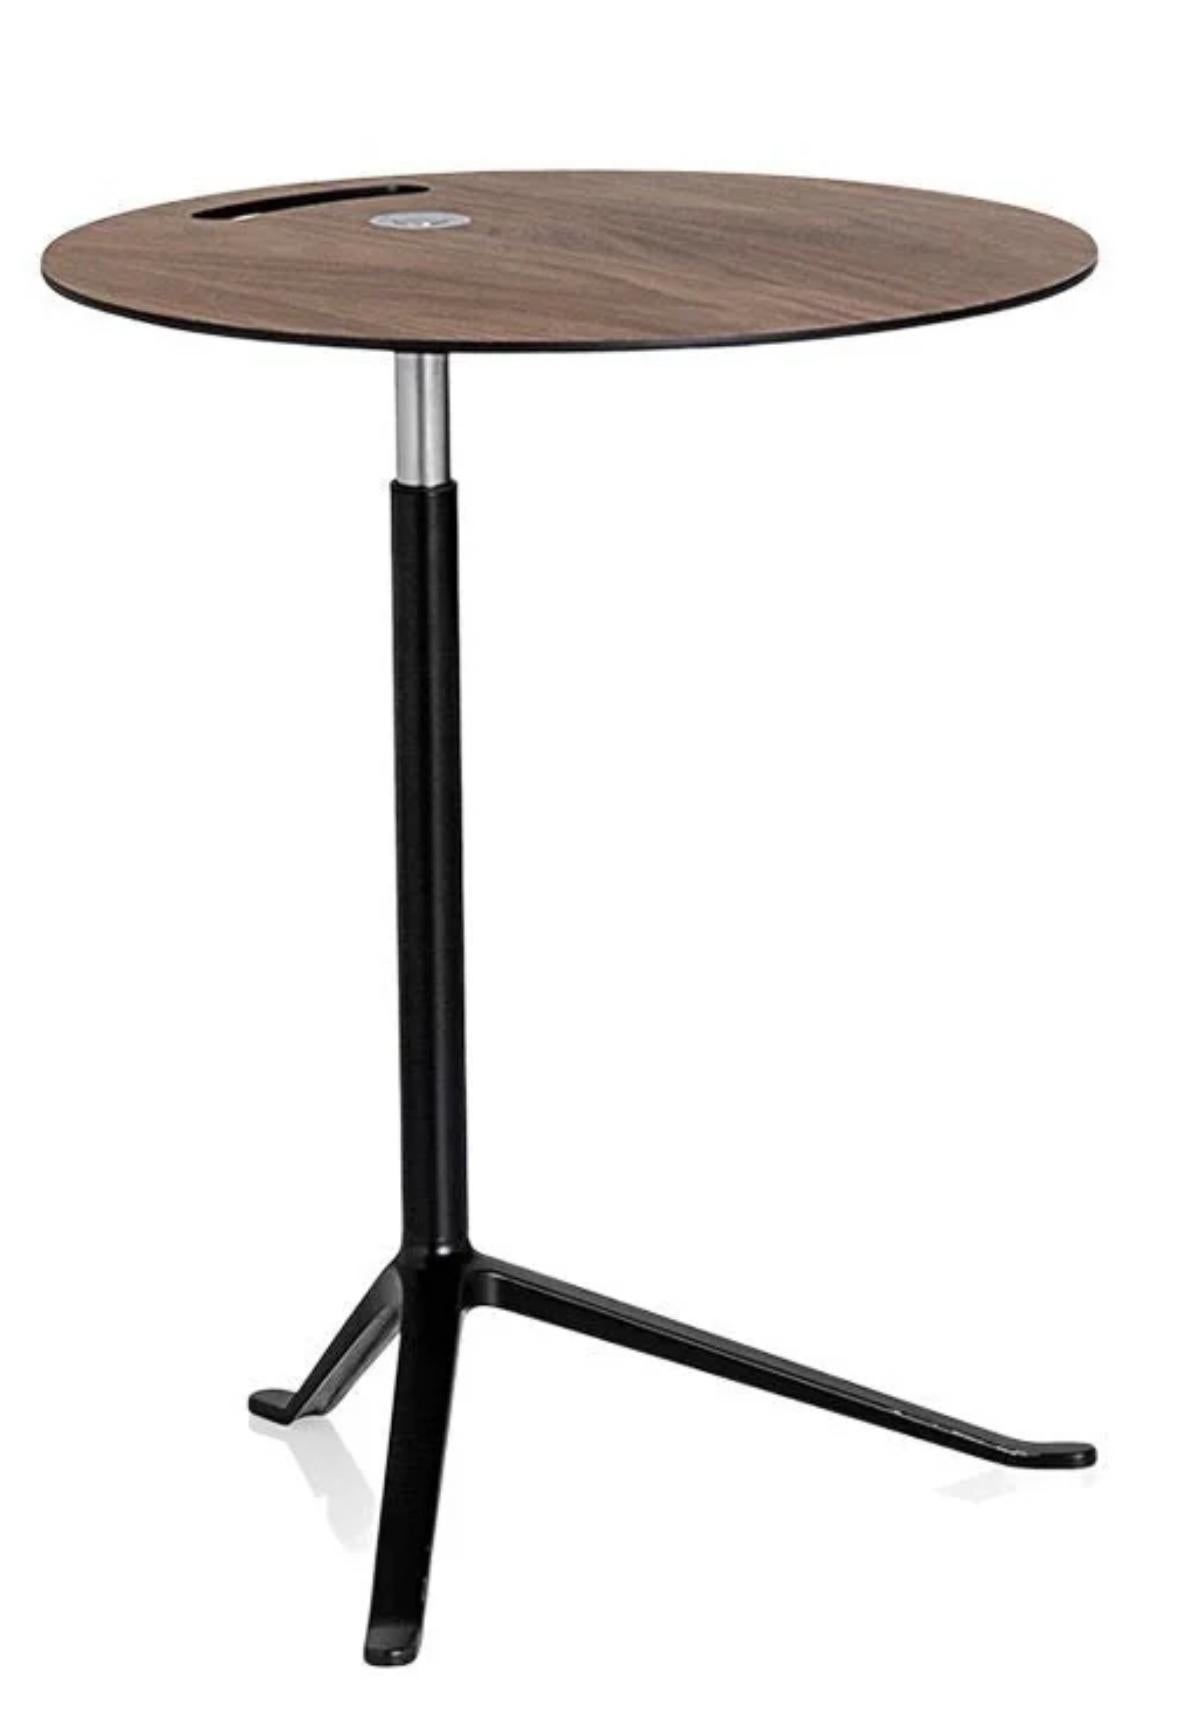 Little Friend KS11 Height-Adjustable Table, Fritz Hansen, Walnut, Denmark.